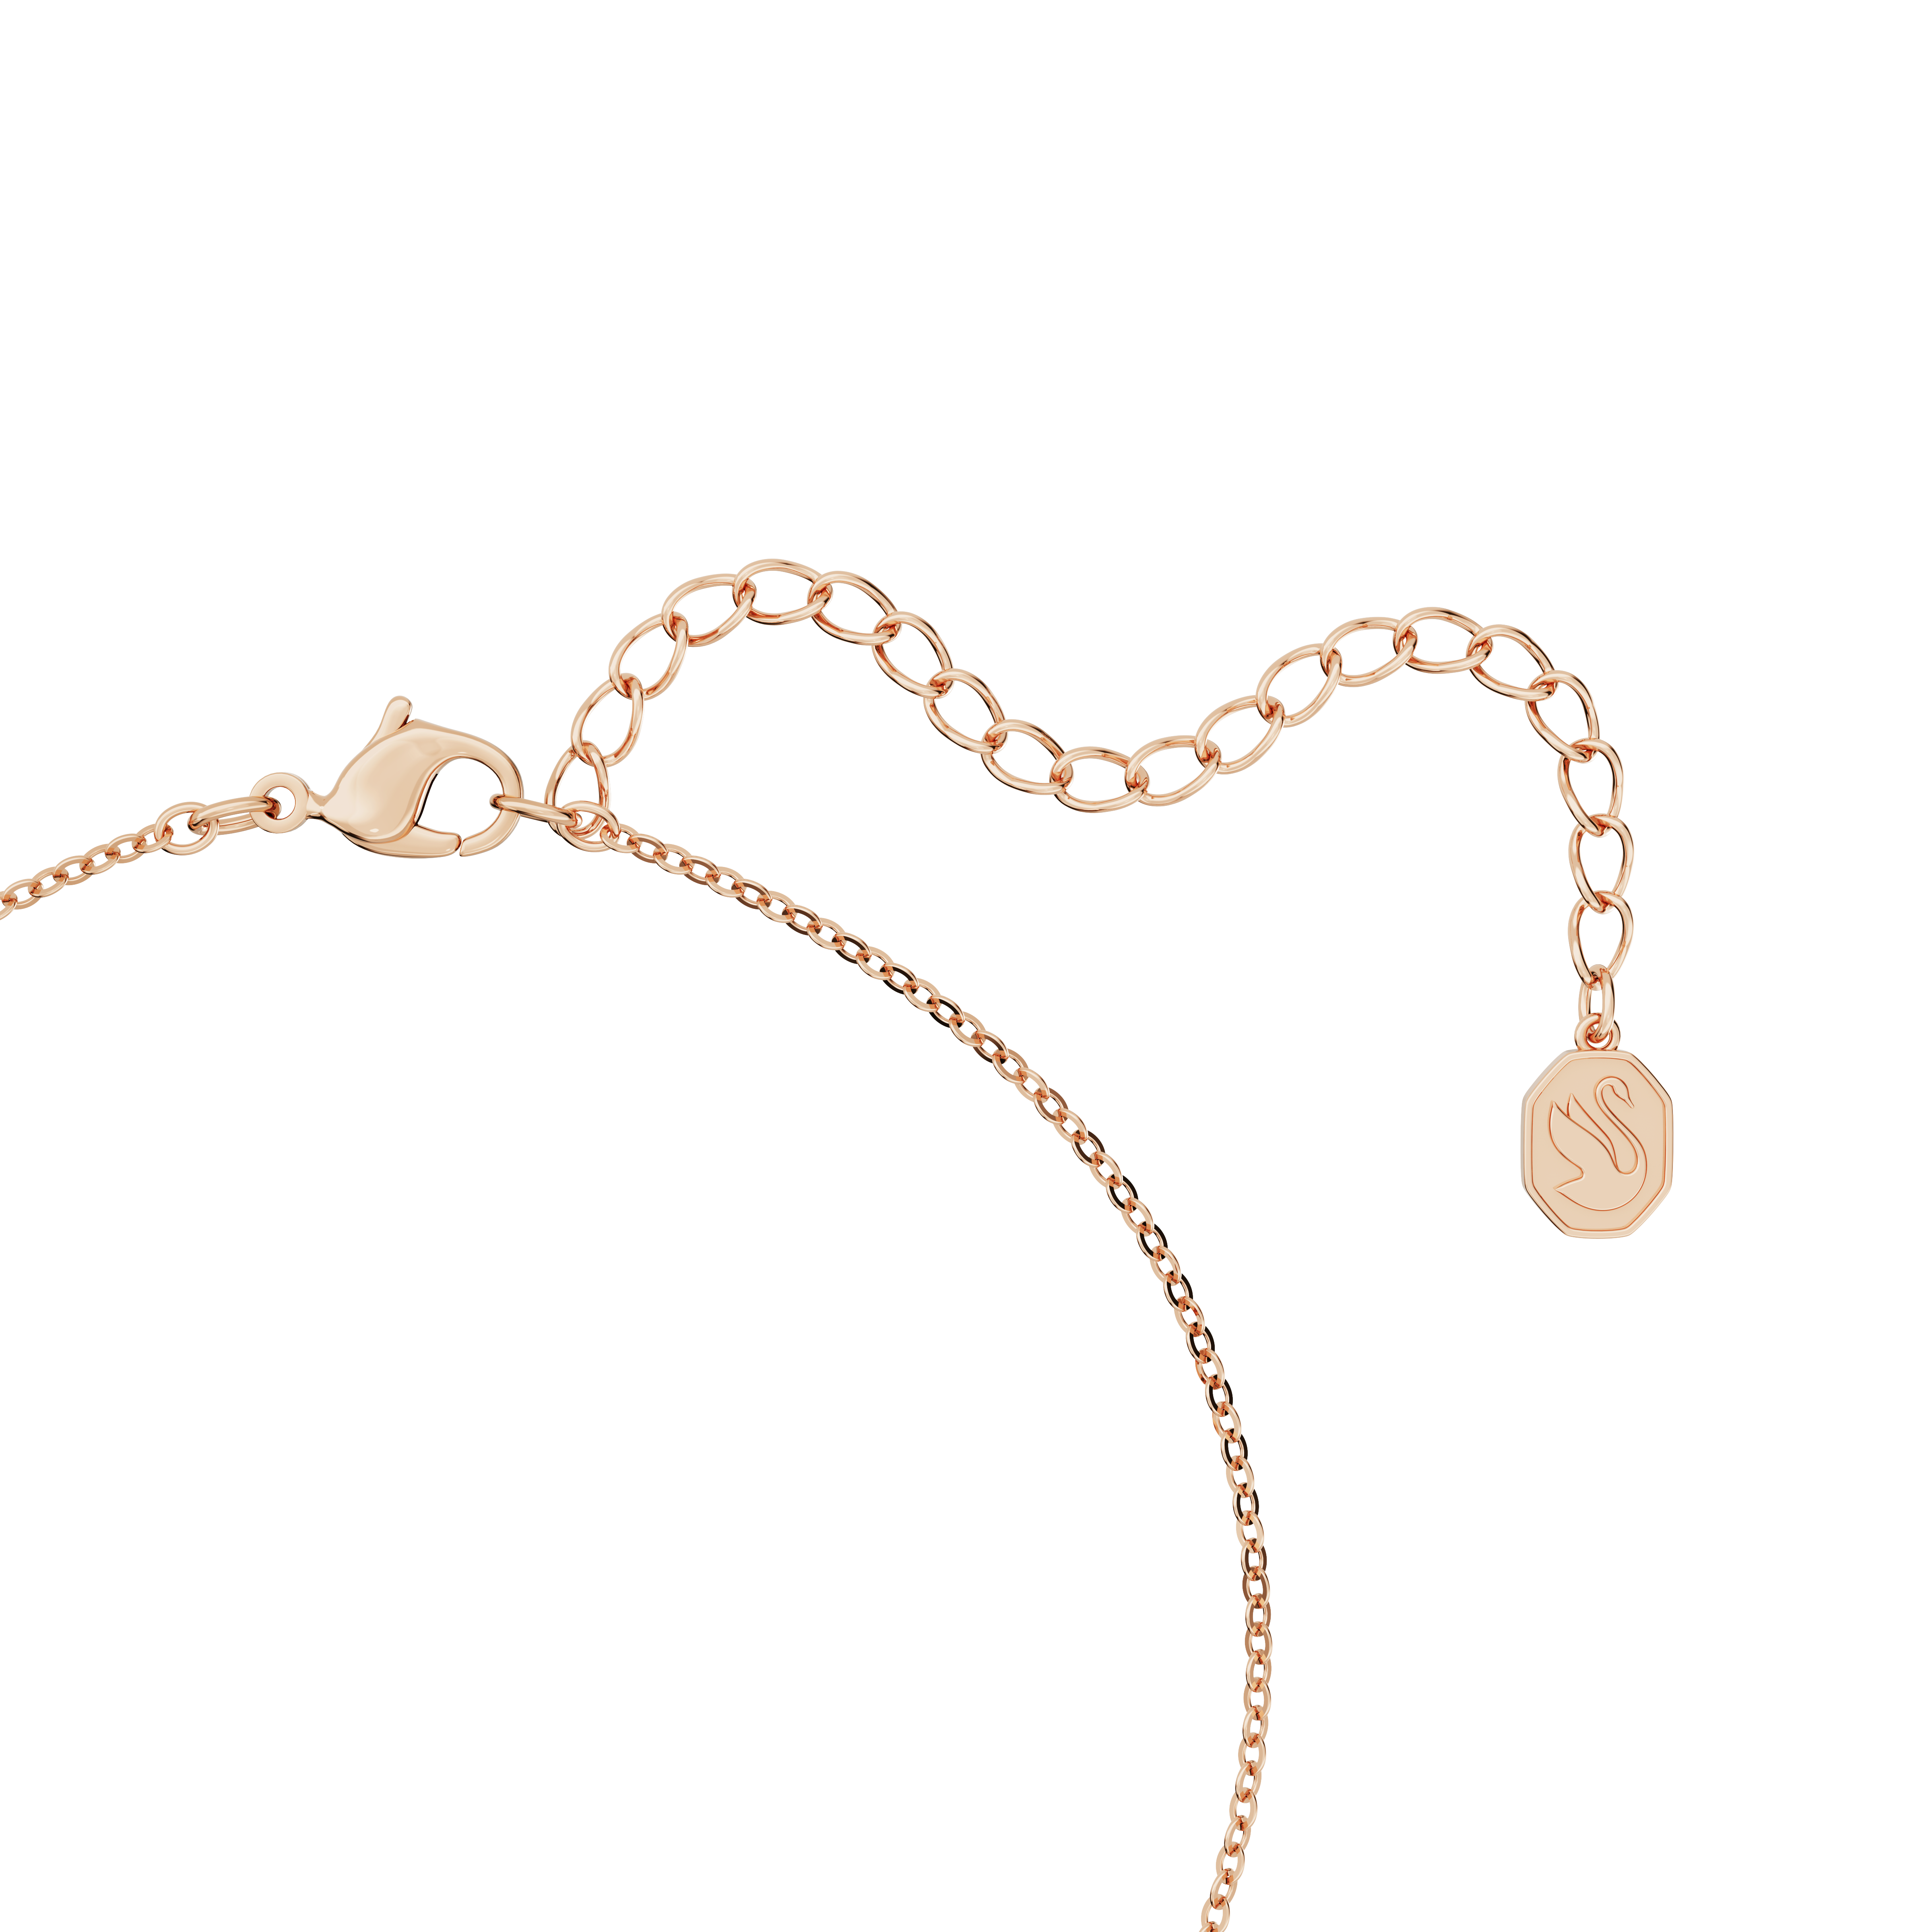 Originally pendant, White, Rose gold-tone plated by SWAROVSKI